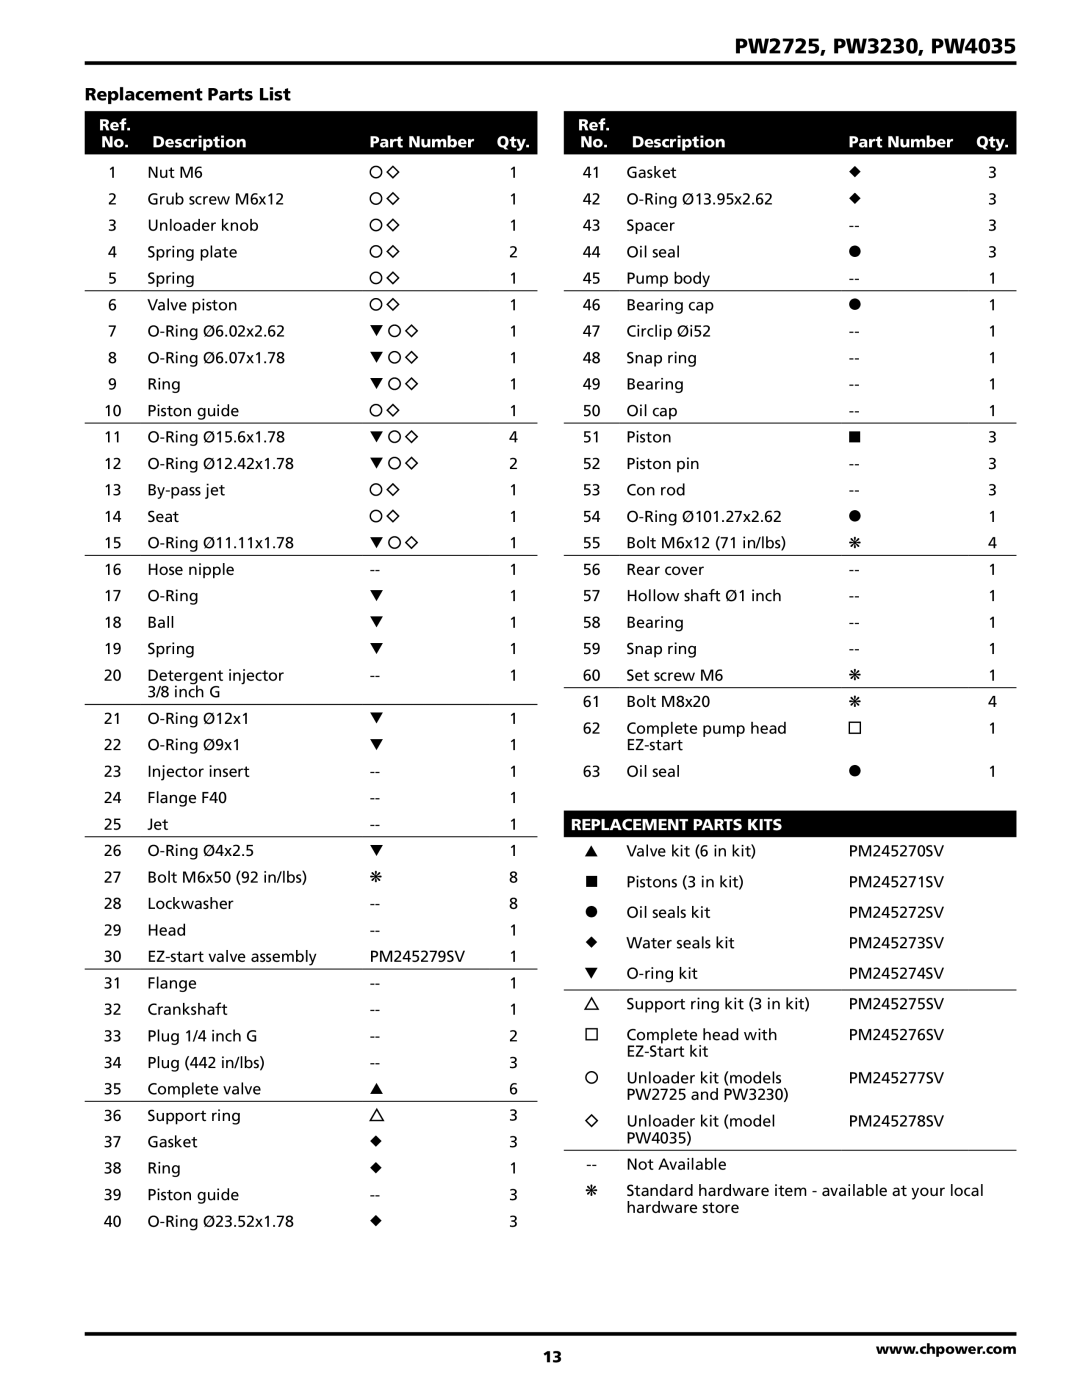 Campbell Hausfeld PW2725, PW3230, PW4035, Replacement Parts List, Description, Part Number, Replacement Parts Kits 